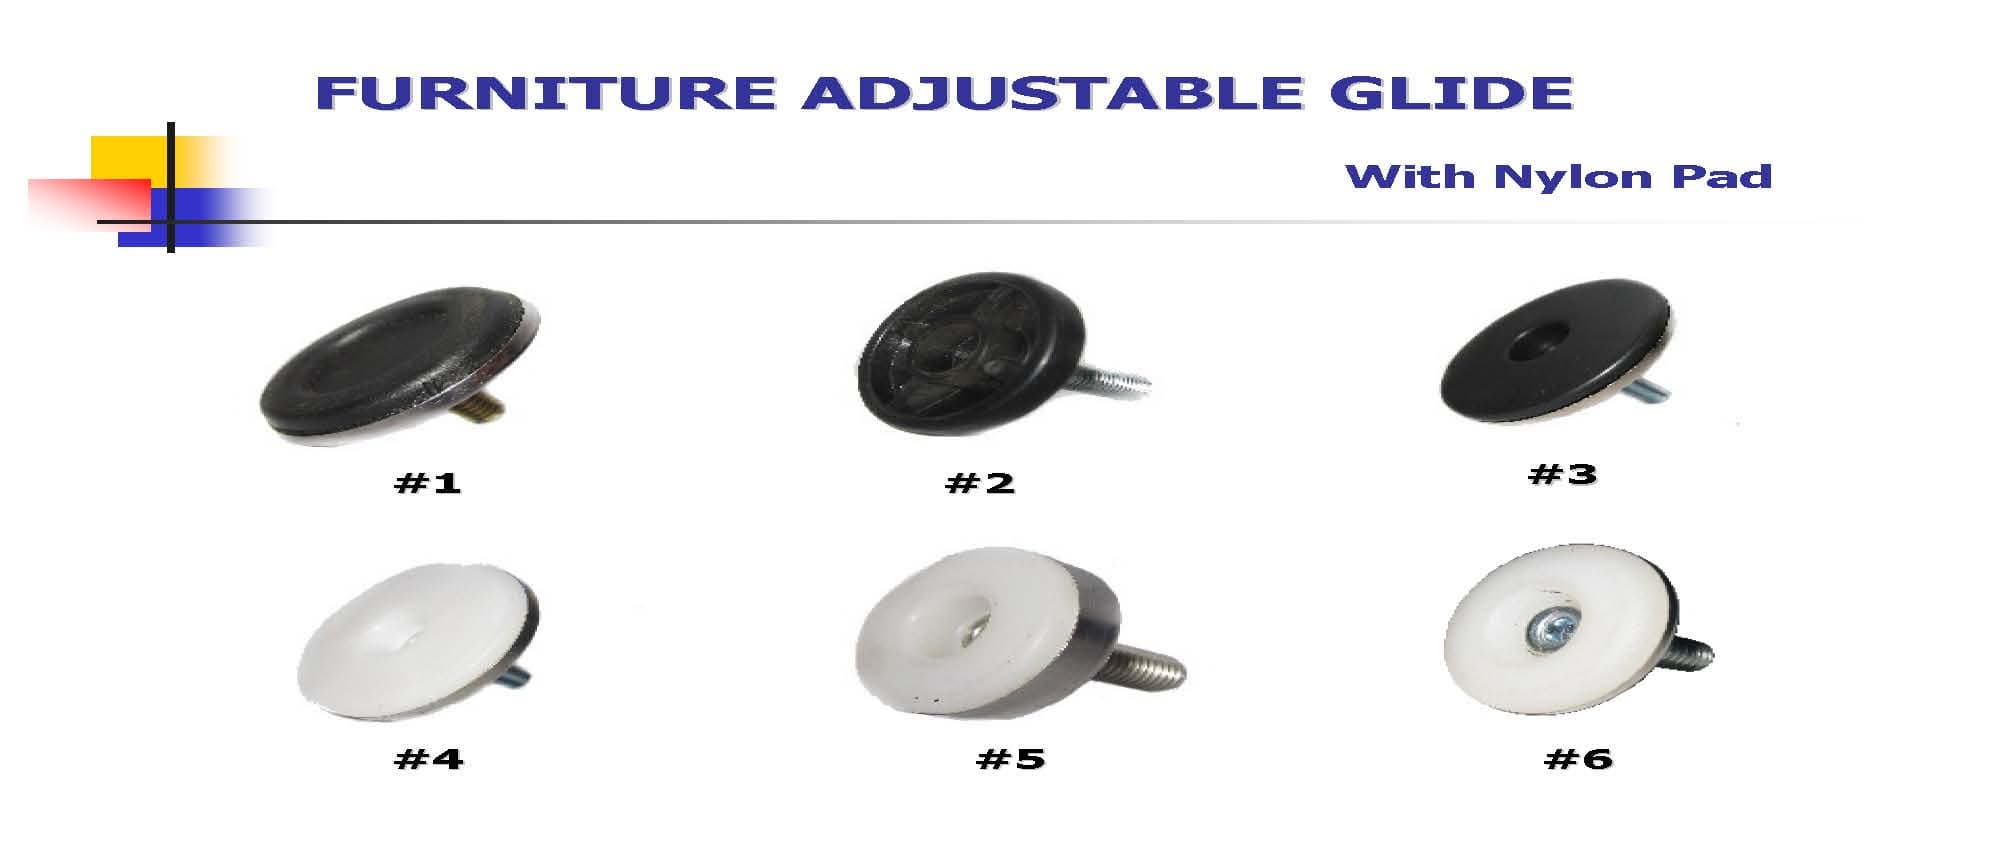 Furniture adjustable glide,adjustable feet, adjustable leveing mount